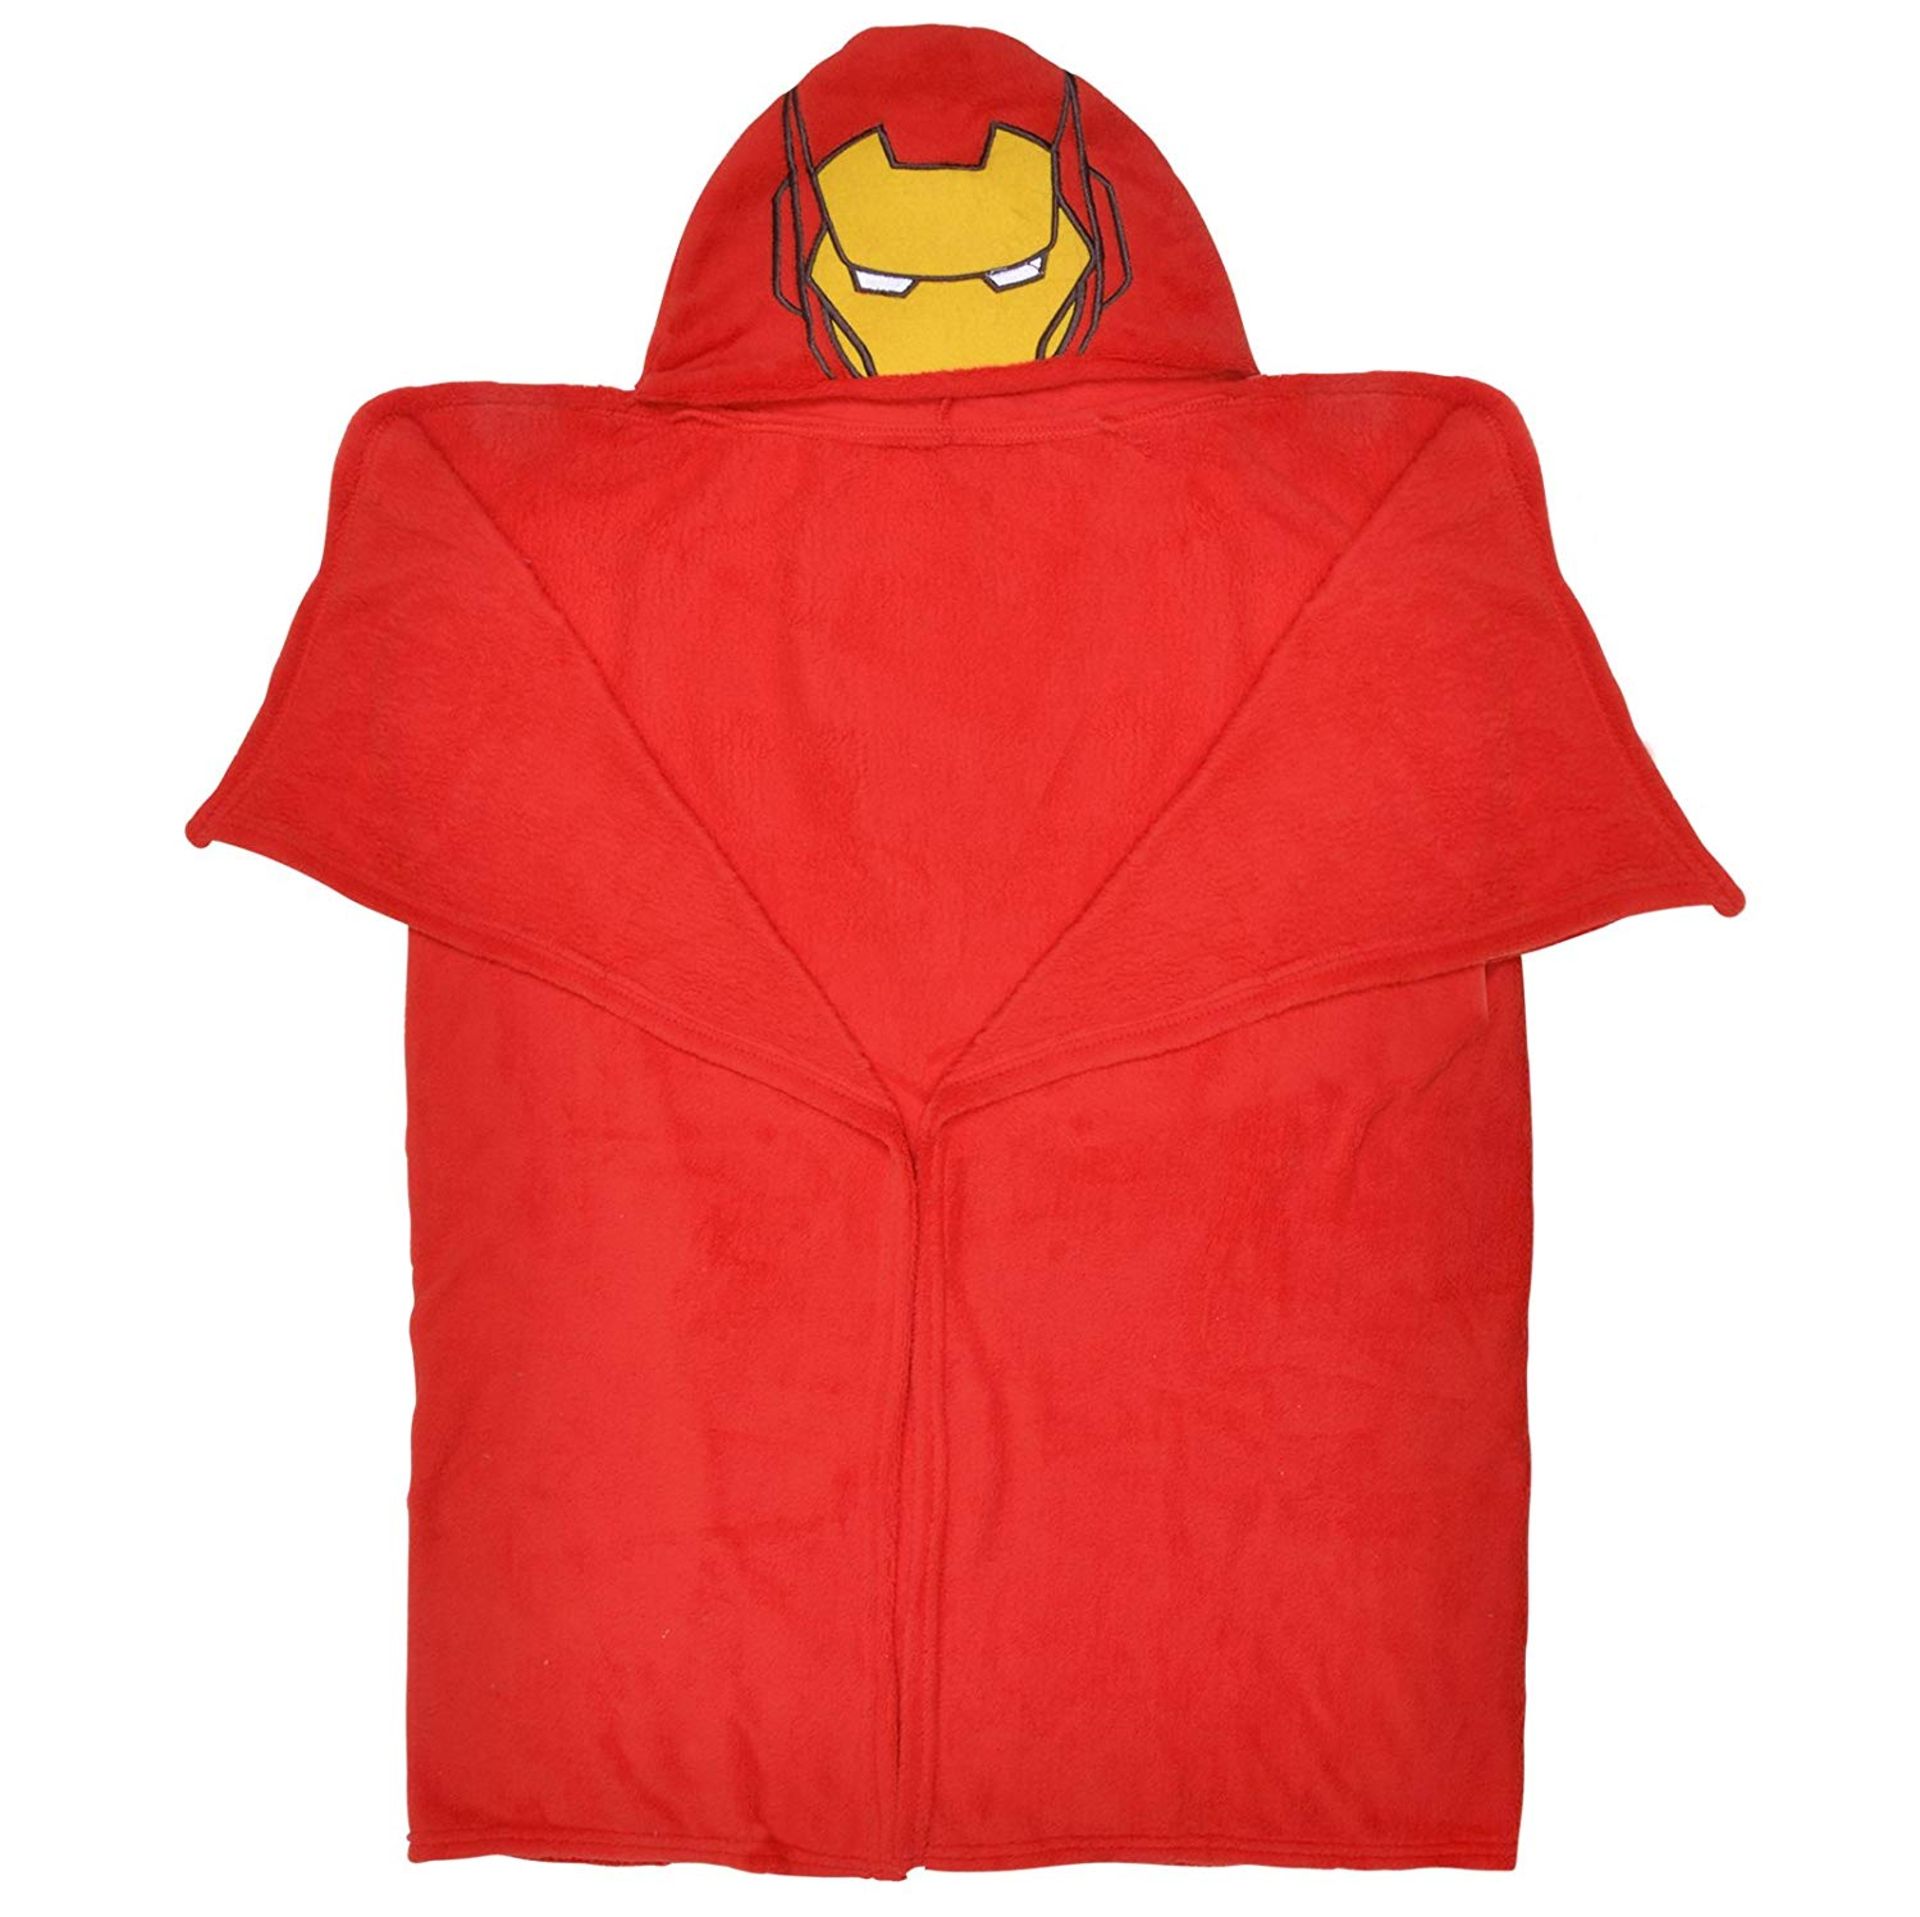 10pcs Brand new Sealed Marvel Iron Man Cuddle Blanket with hood